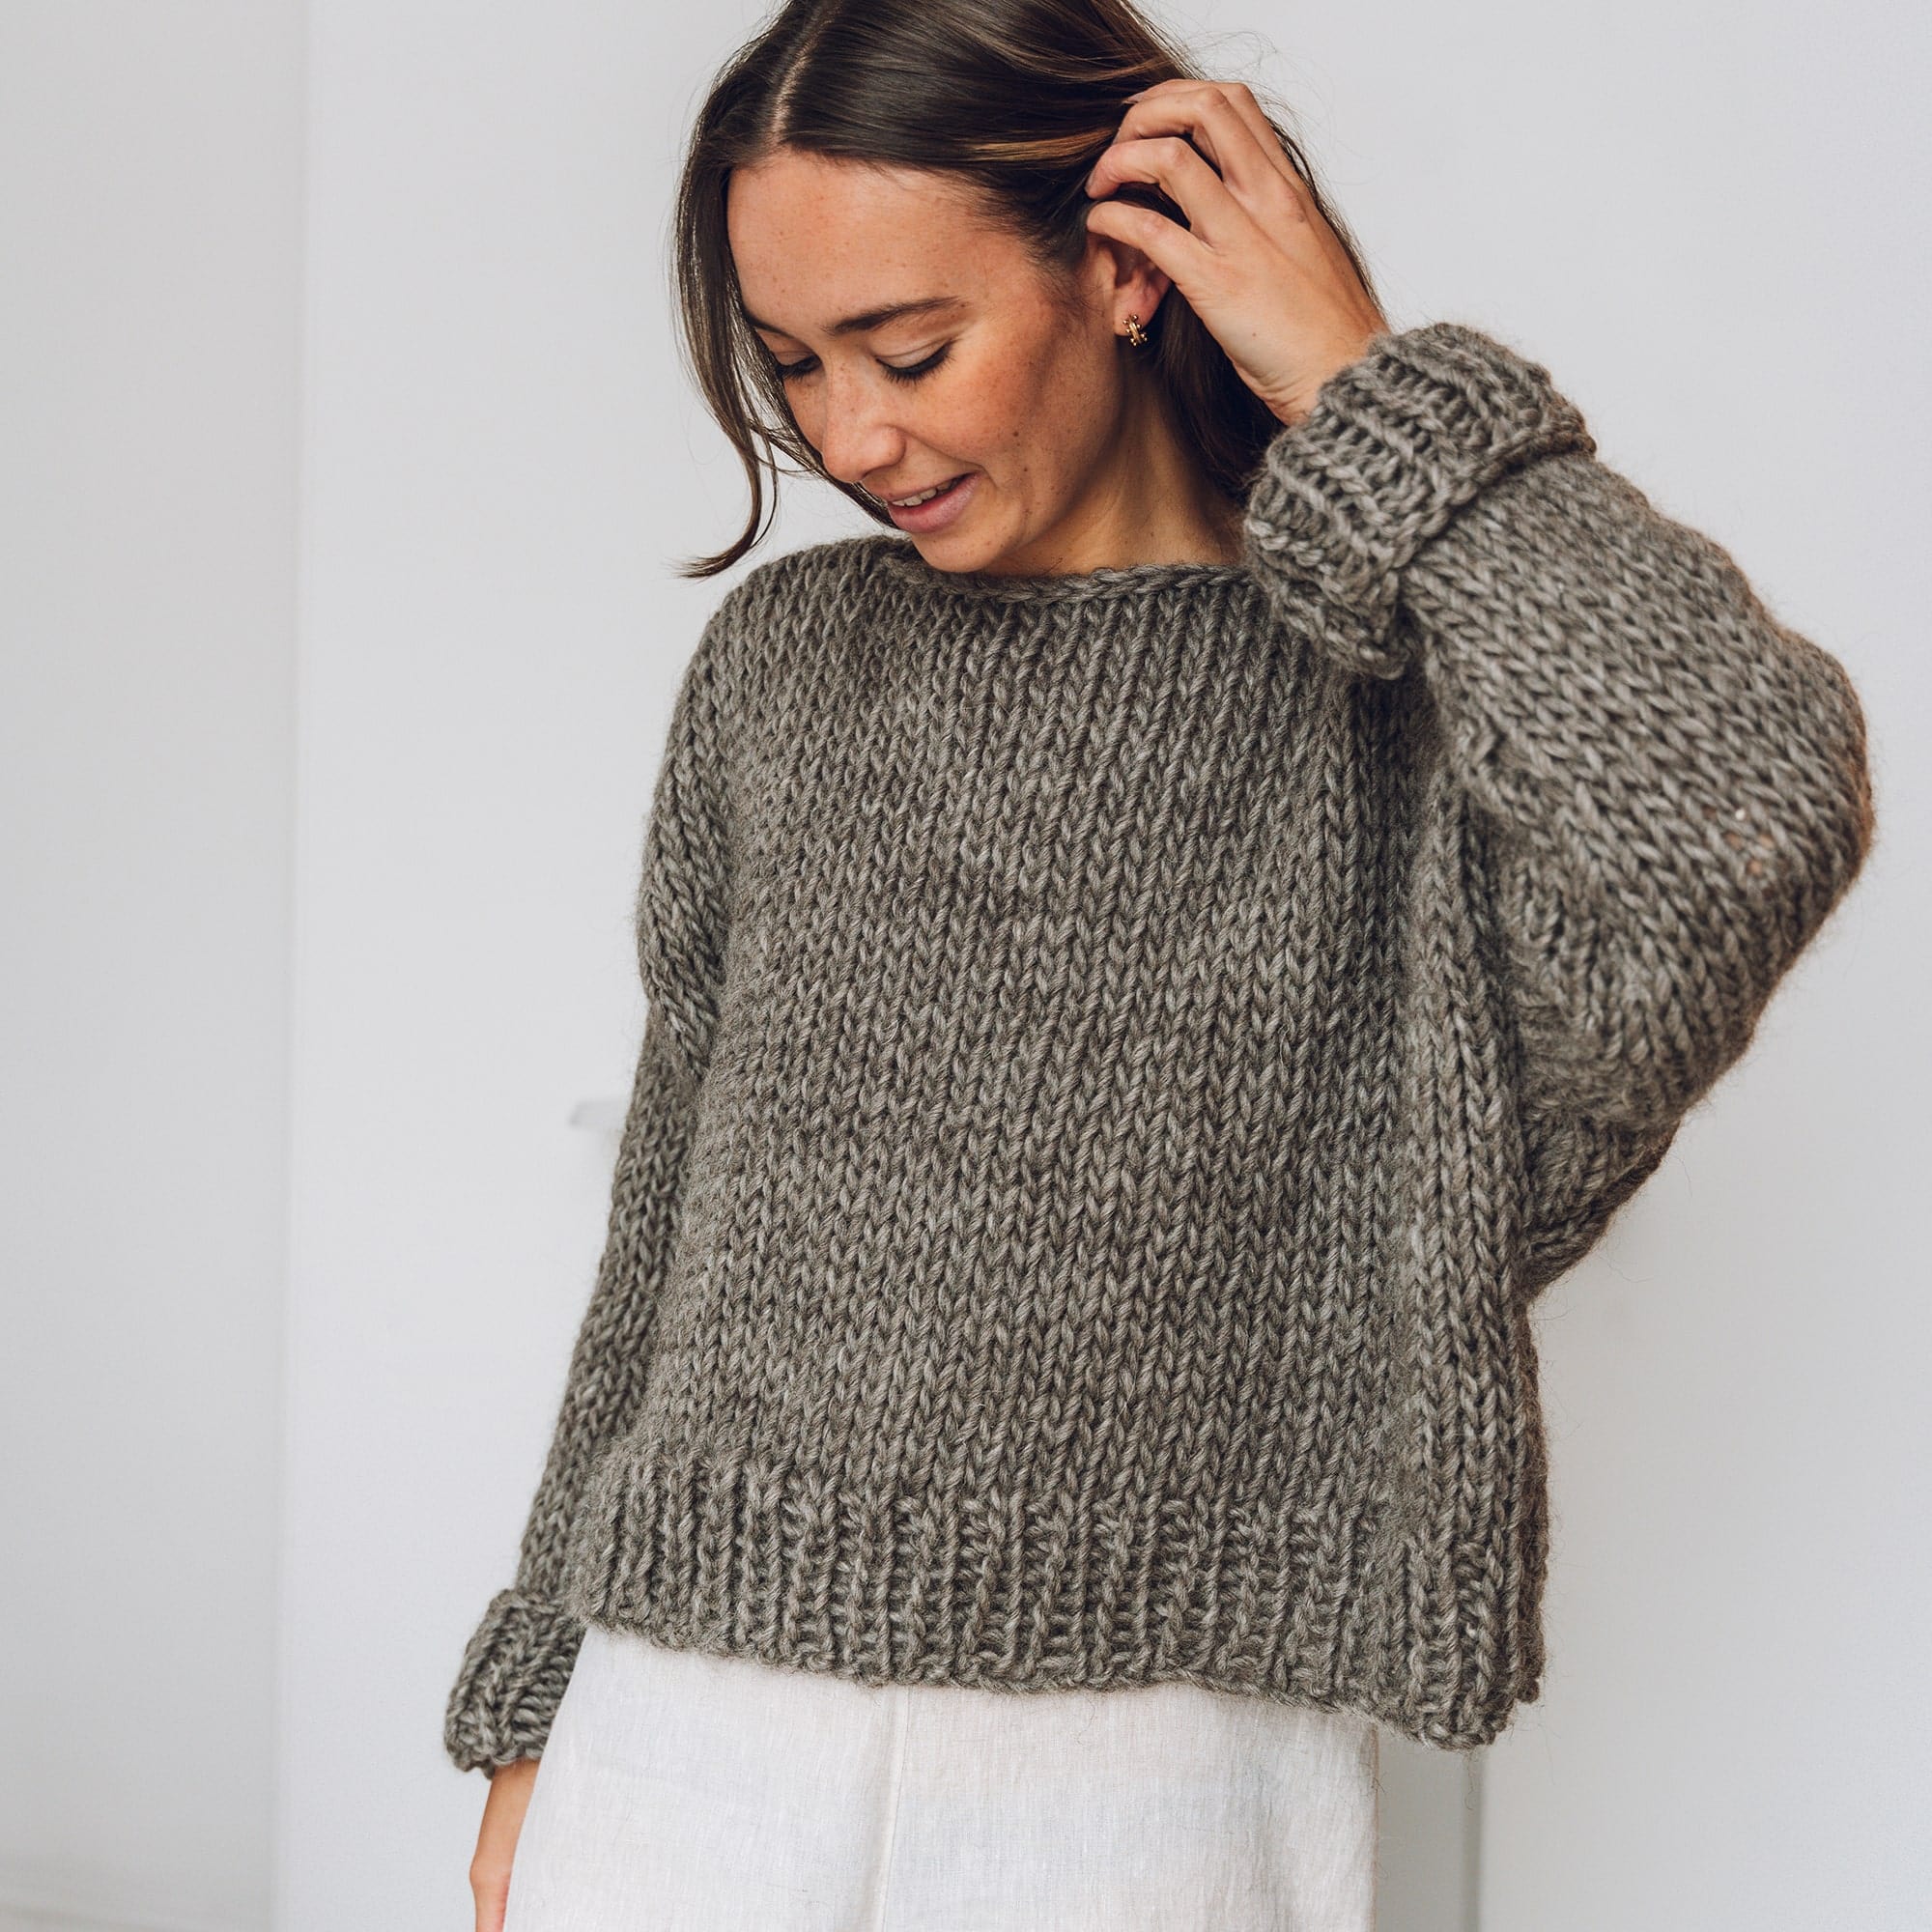 Beginners Boatneck Jumper - Knitting Pattern - Lauren Aston Designs